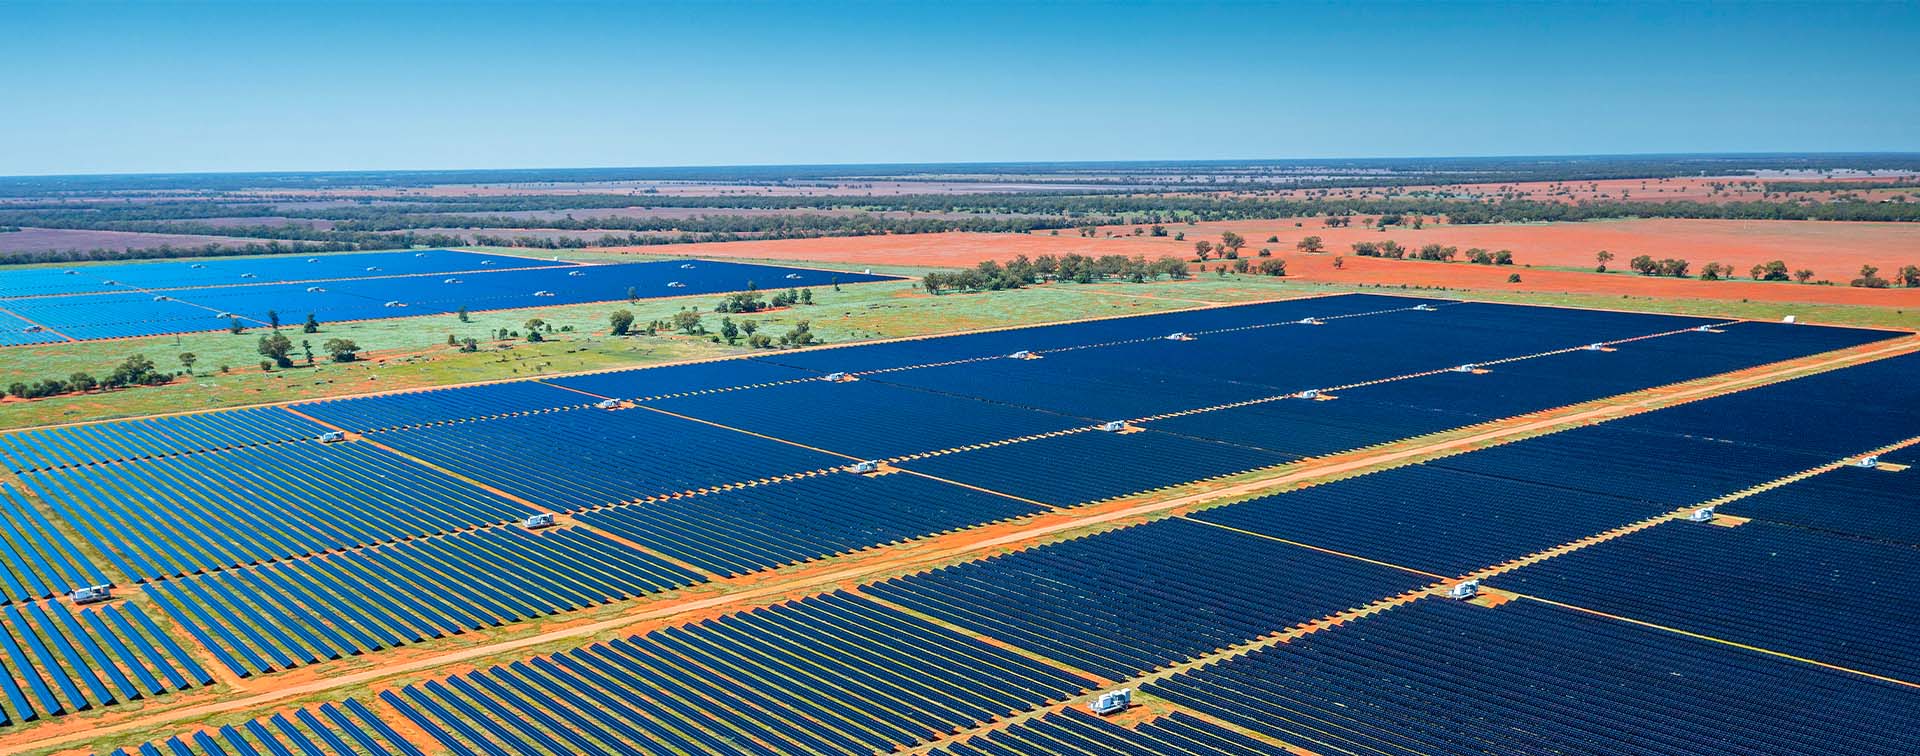 Rows of solar panels in an open field in New South Wales, Australia